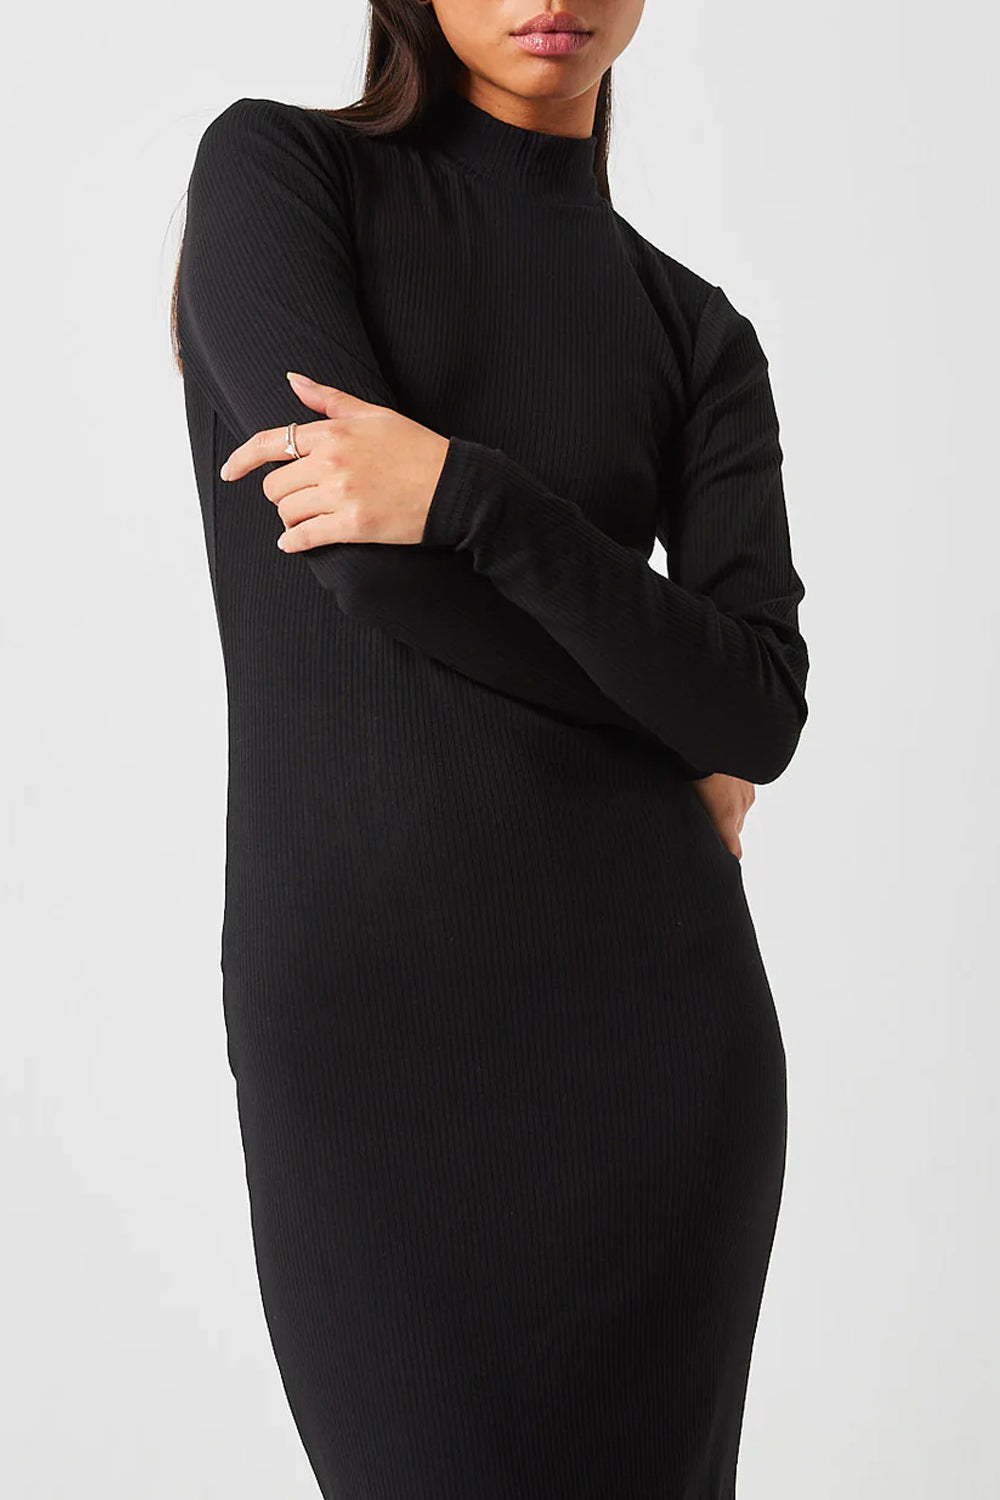 Women's Minimum Clothing Ressy Dress in Black